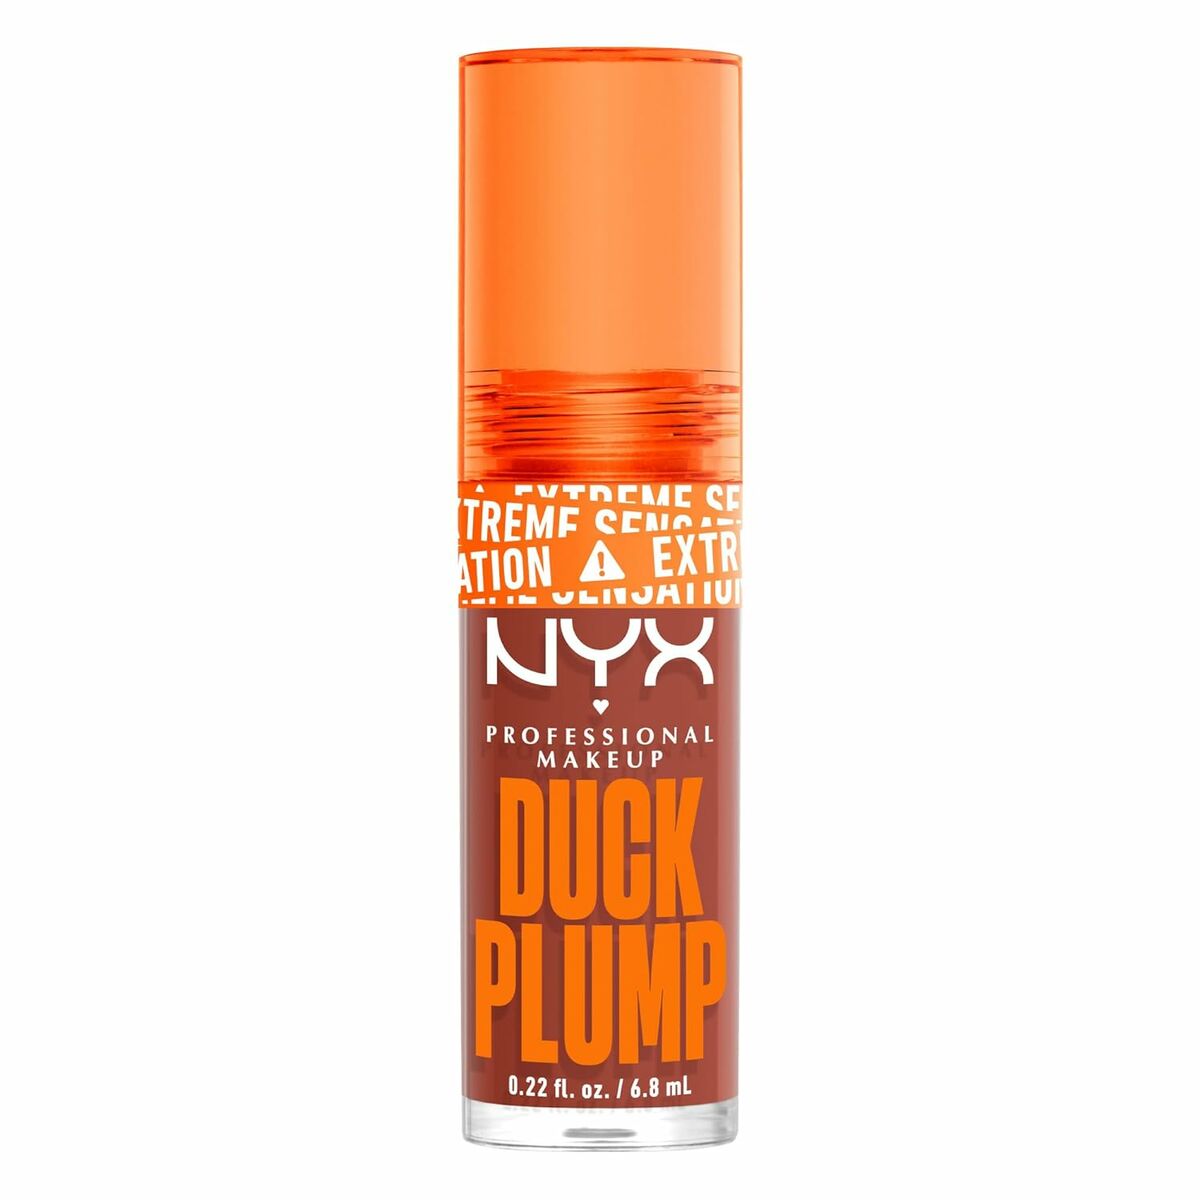 Lip-Gloss Nyx Duck Plump Brown από χειροκροτήματα 6,8 ml